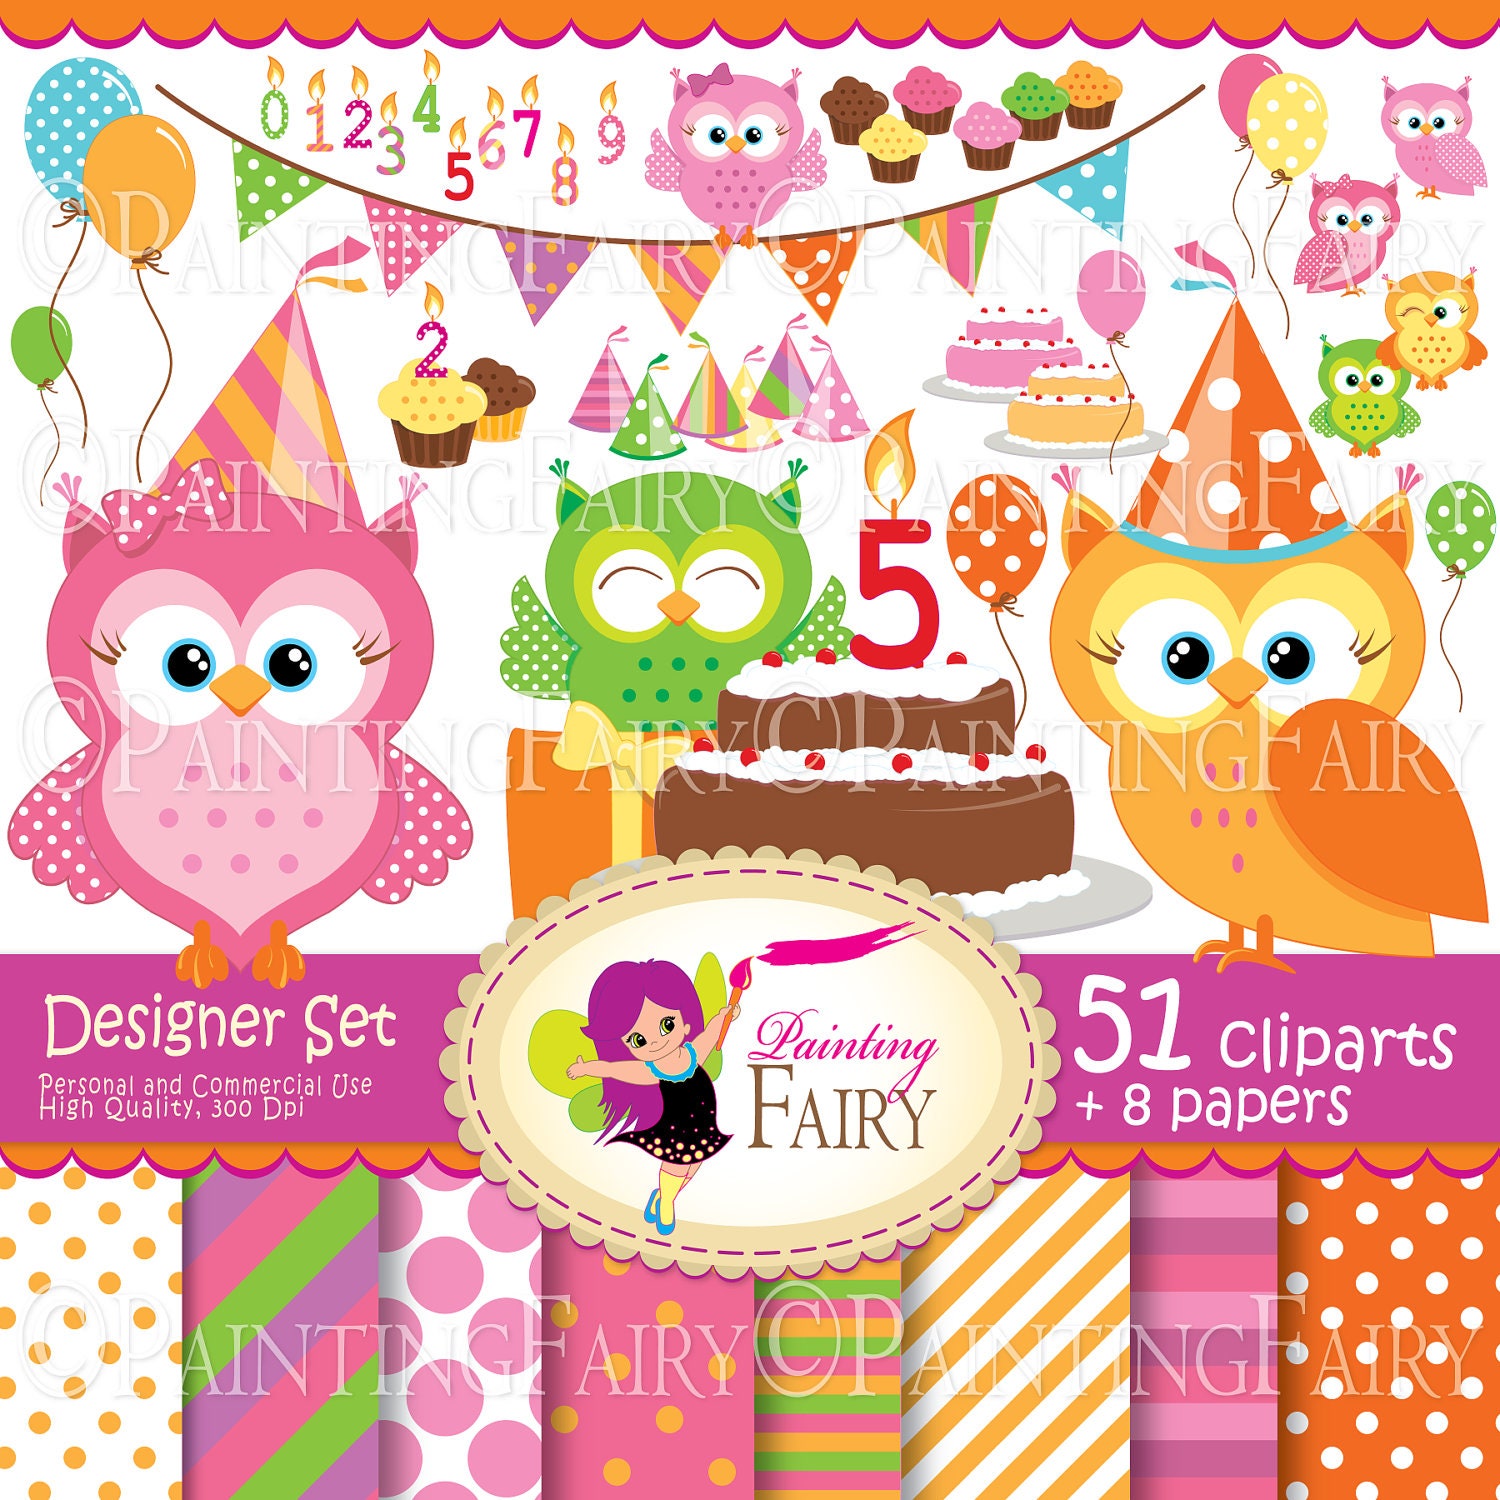 Big Collection Birthday owls Digital clipart set Cute owl clip art Girl Boy fun bunting cupcake cake hat Party digital elements pf00036-1